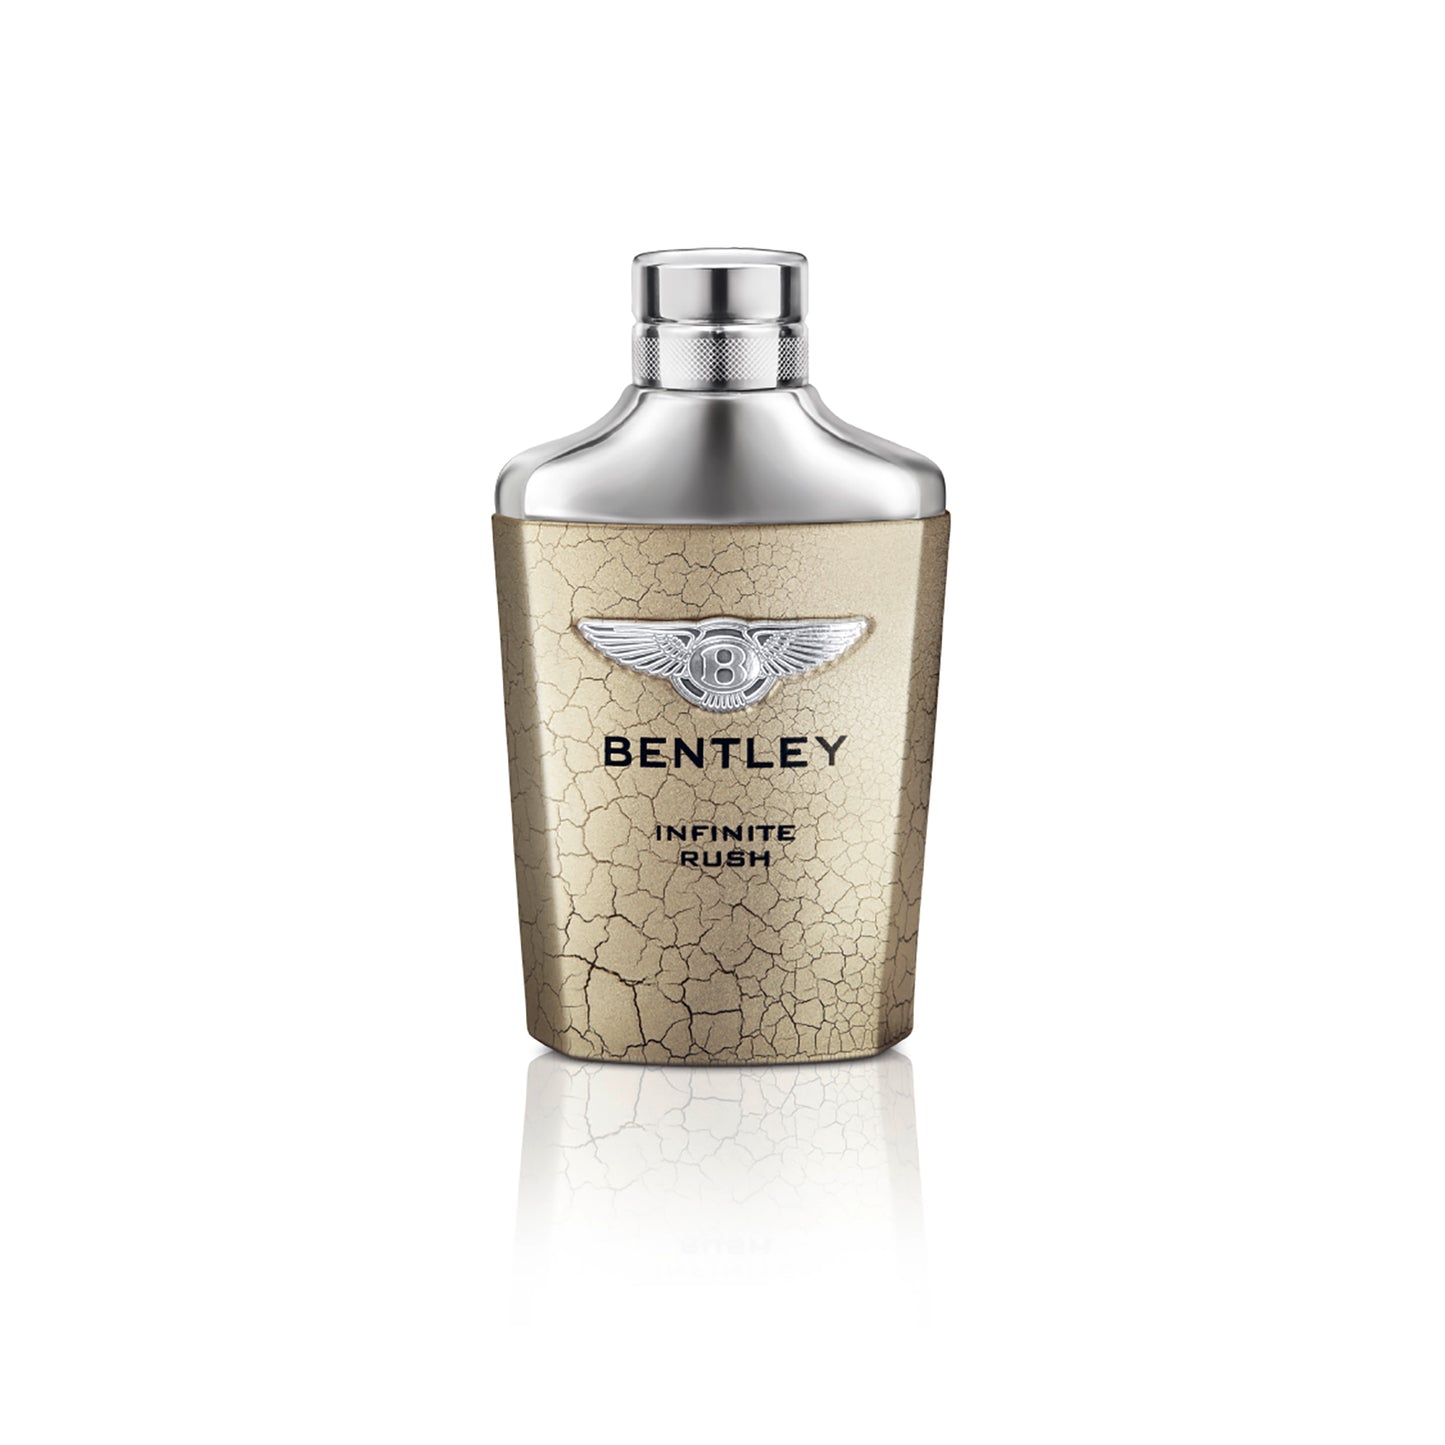 Bentley for Men Infinite Rush 3.4oz Eau de Toilette